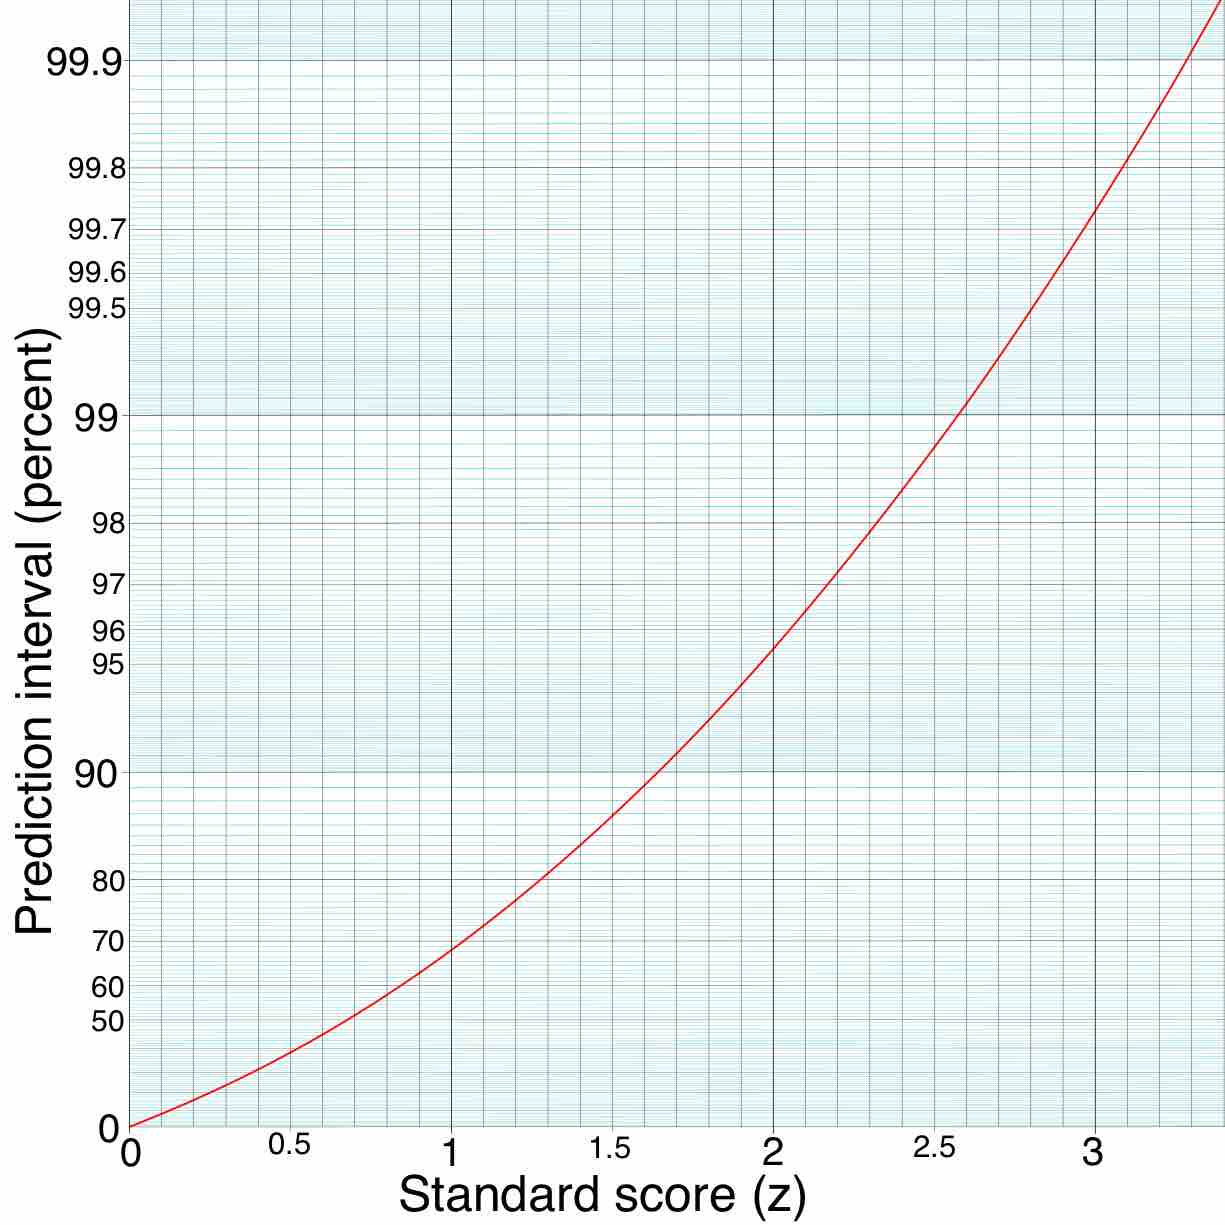 Standard Score and Prediction Interval